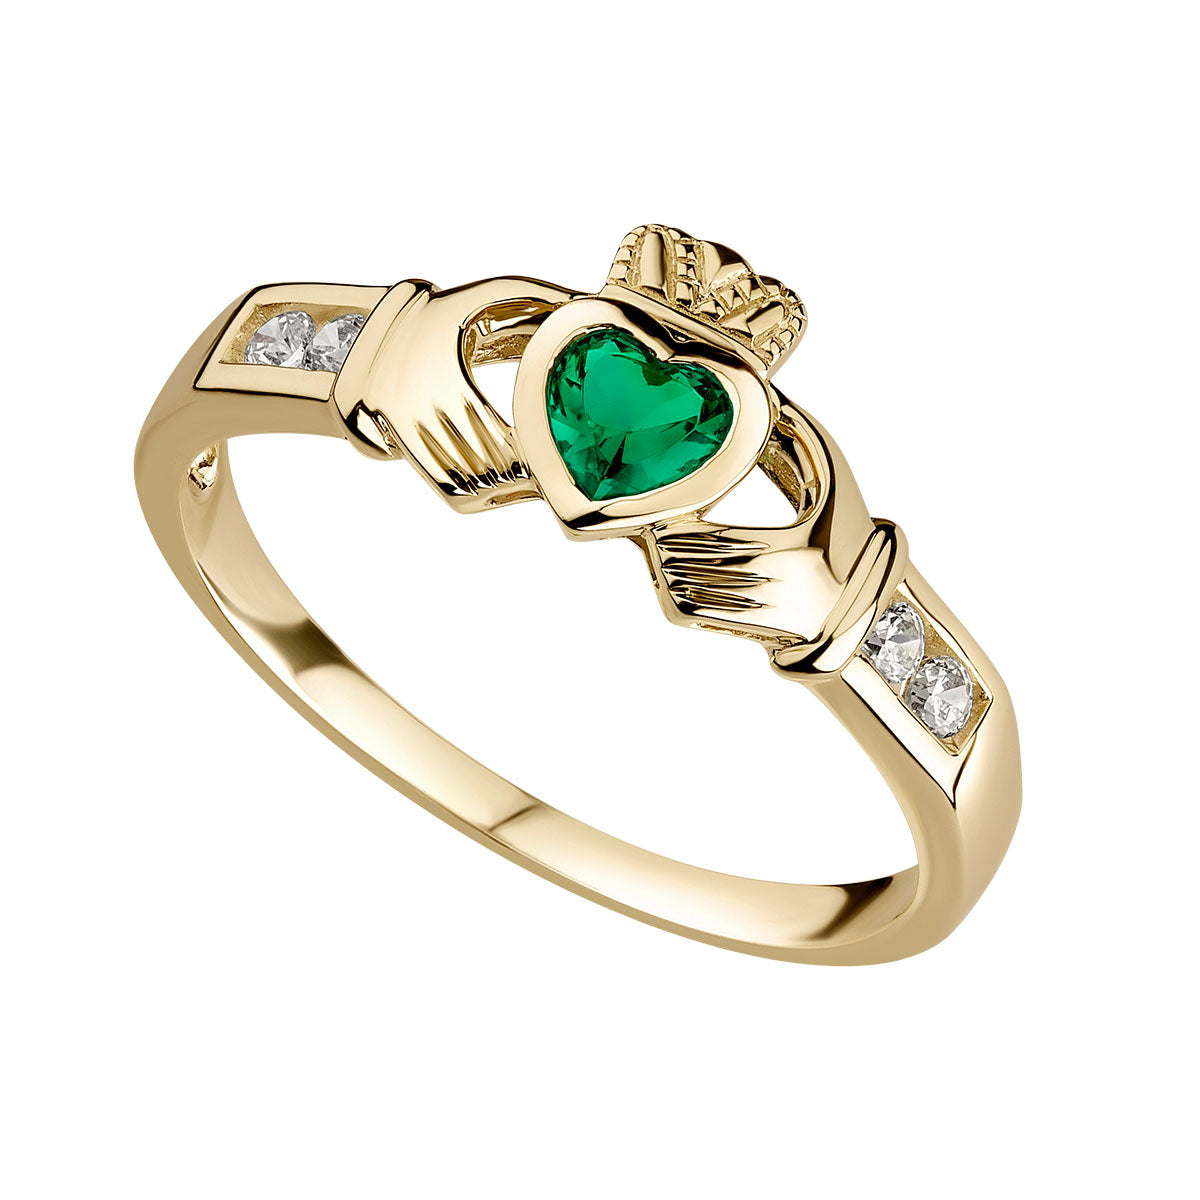 nine karat Gold Emerald And Cubic Zirconia Claddagh Ring S2369 from Solvar Jewellers, Ireland